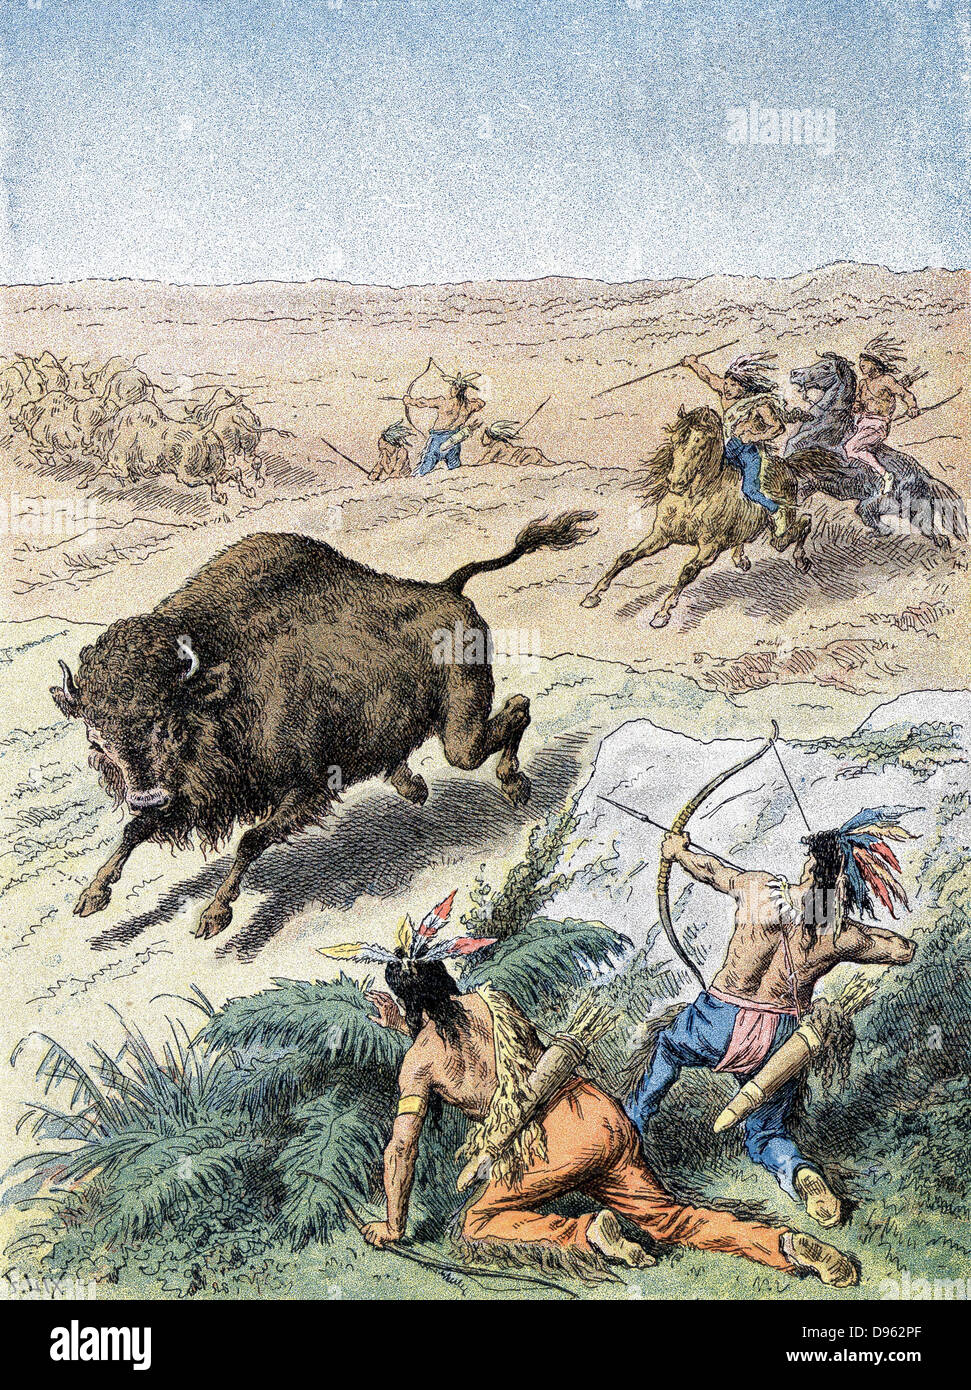 Indios cazando búfalos fotografías e imágenes de alta resolución - Alamy